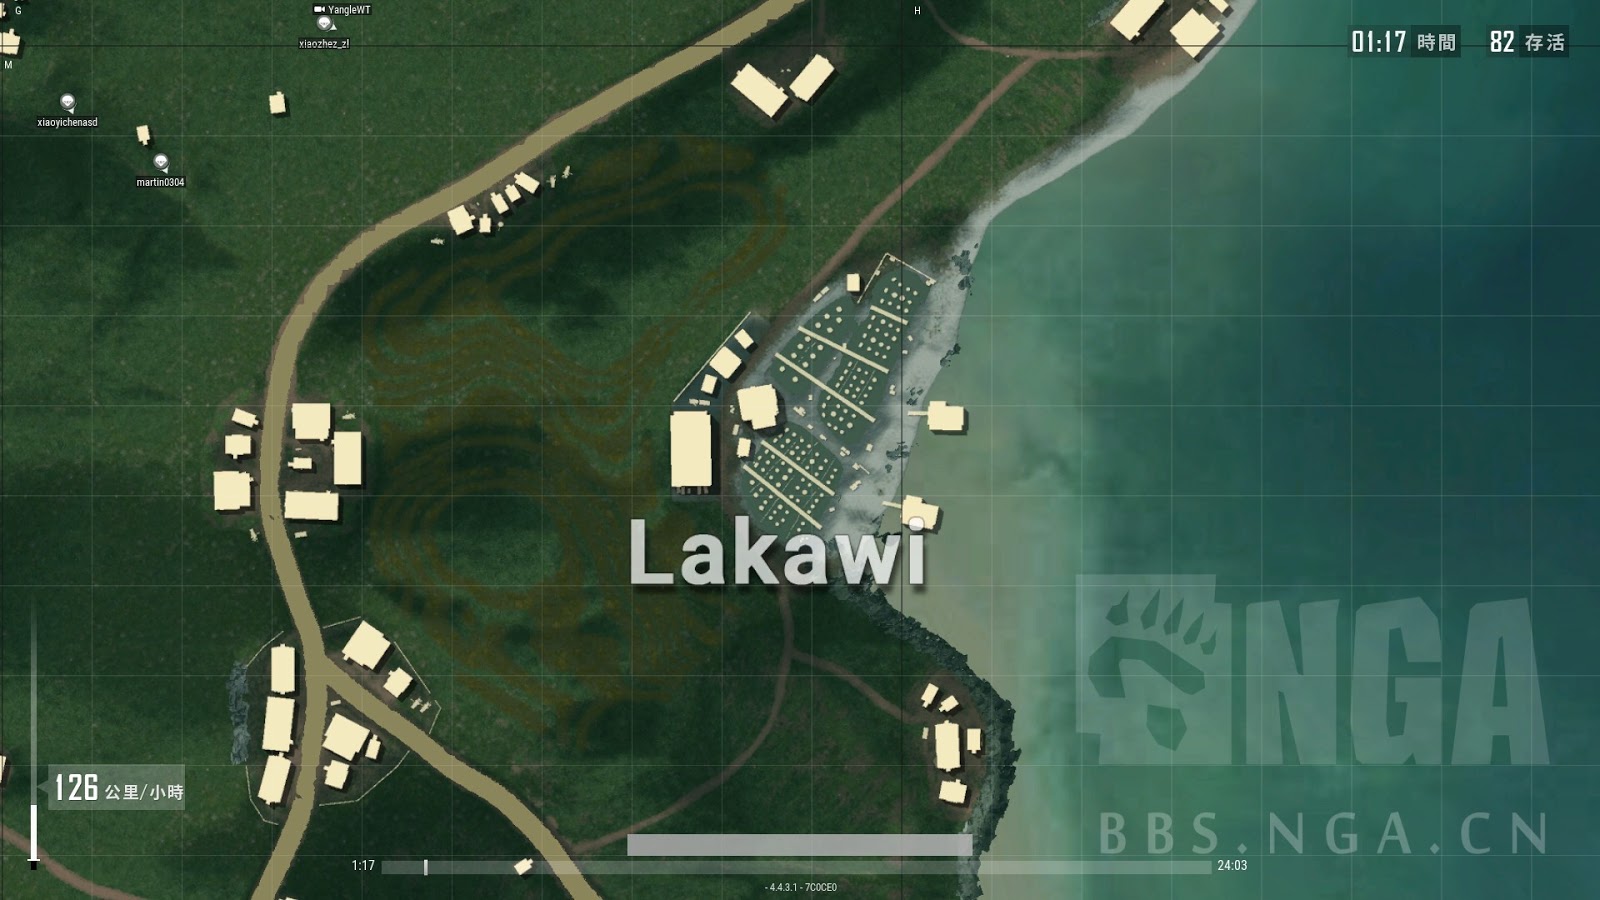 Санук пабг. САНУК PUBG. Sanhok PUBG Map. Санок карта ПУБГ. Lakawi локация санок ПАБГ.